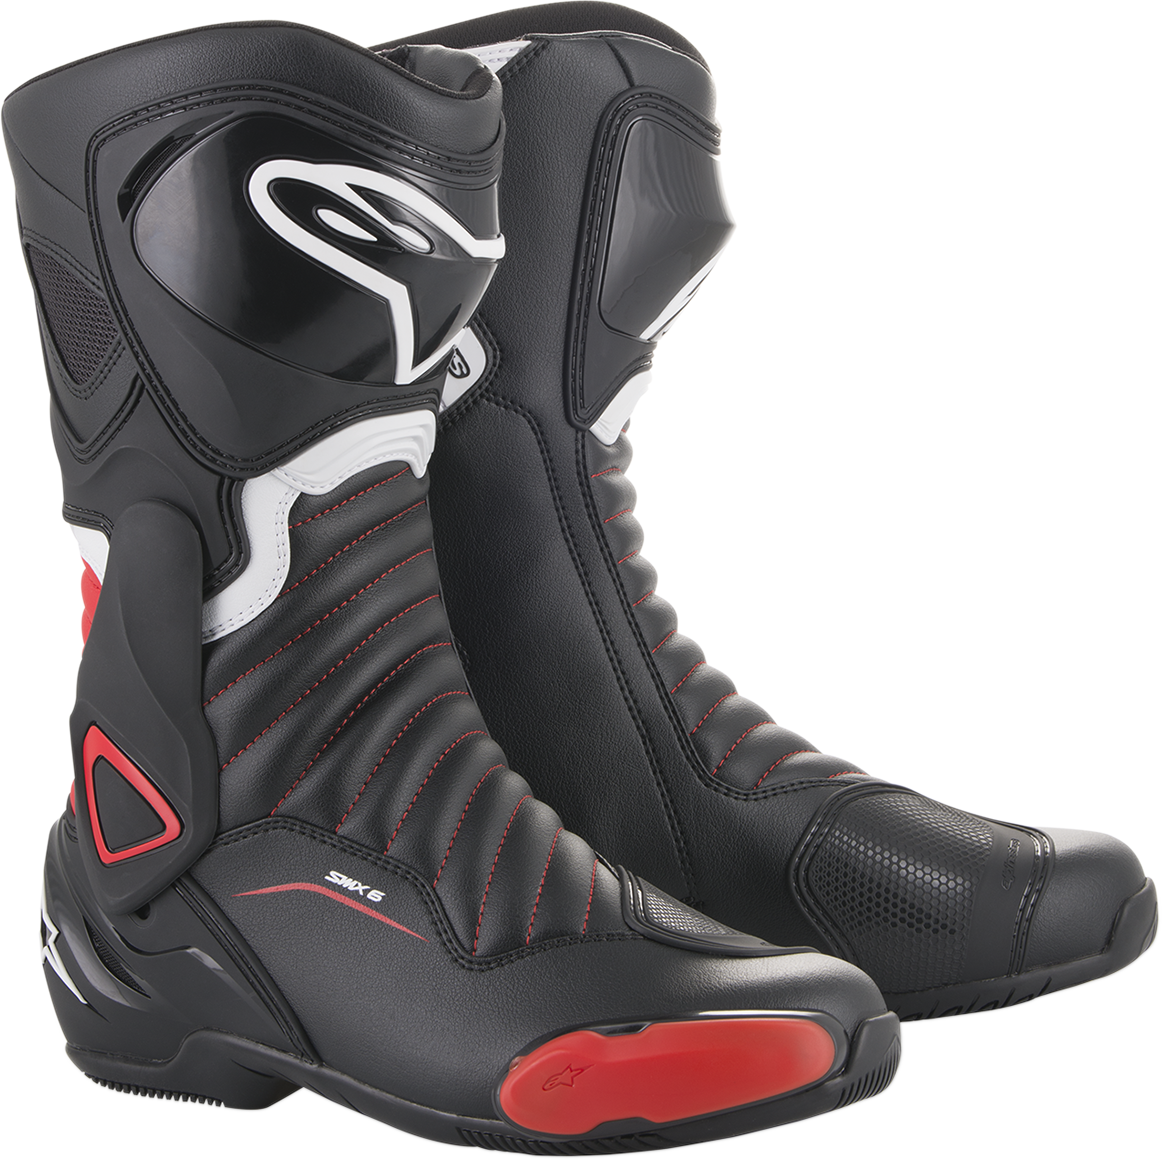 ALPINESTARS SMX-6 v2 Boots - Black/Red - US 9.5 / EU 44 22230171344